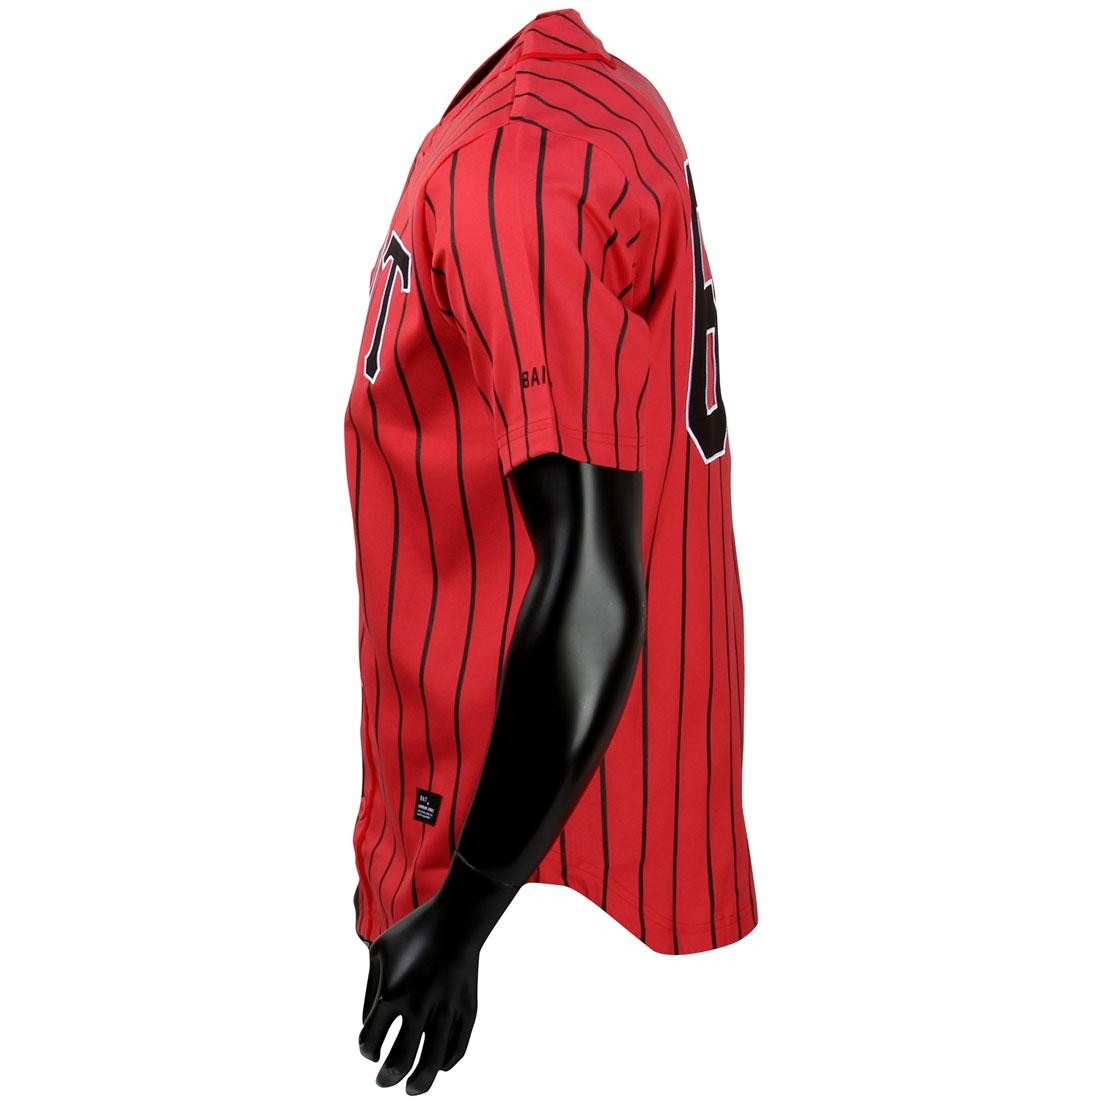 black red baseball jersey